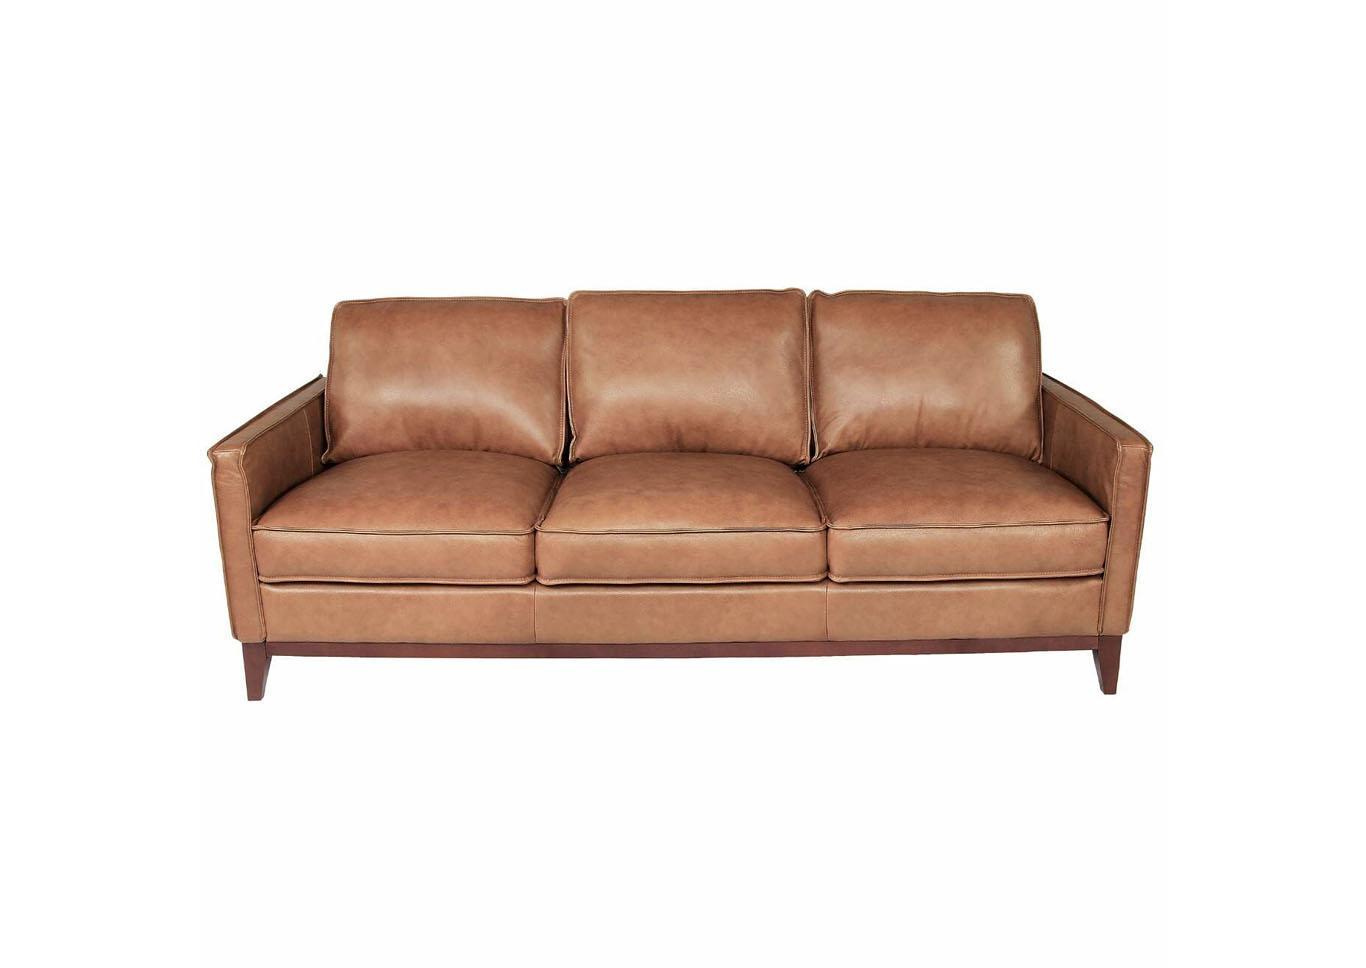 Caramel Sofa Love Seat in Caramel color